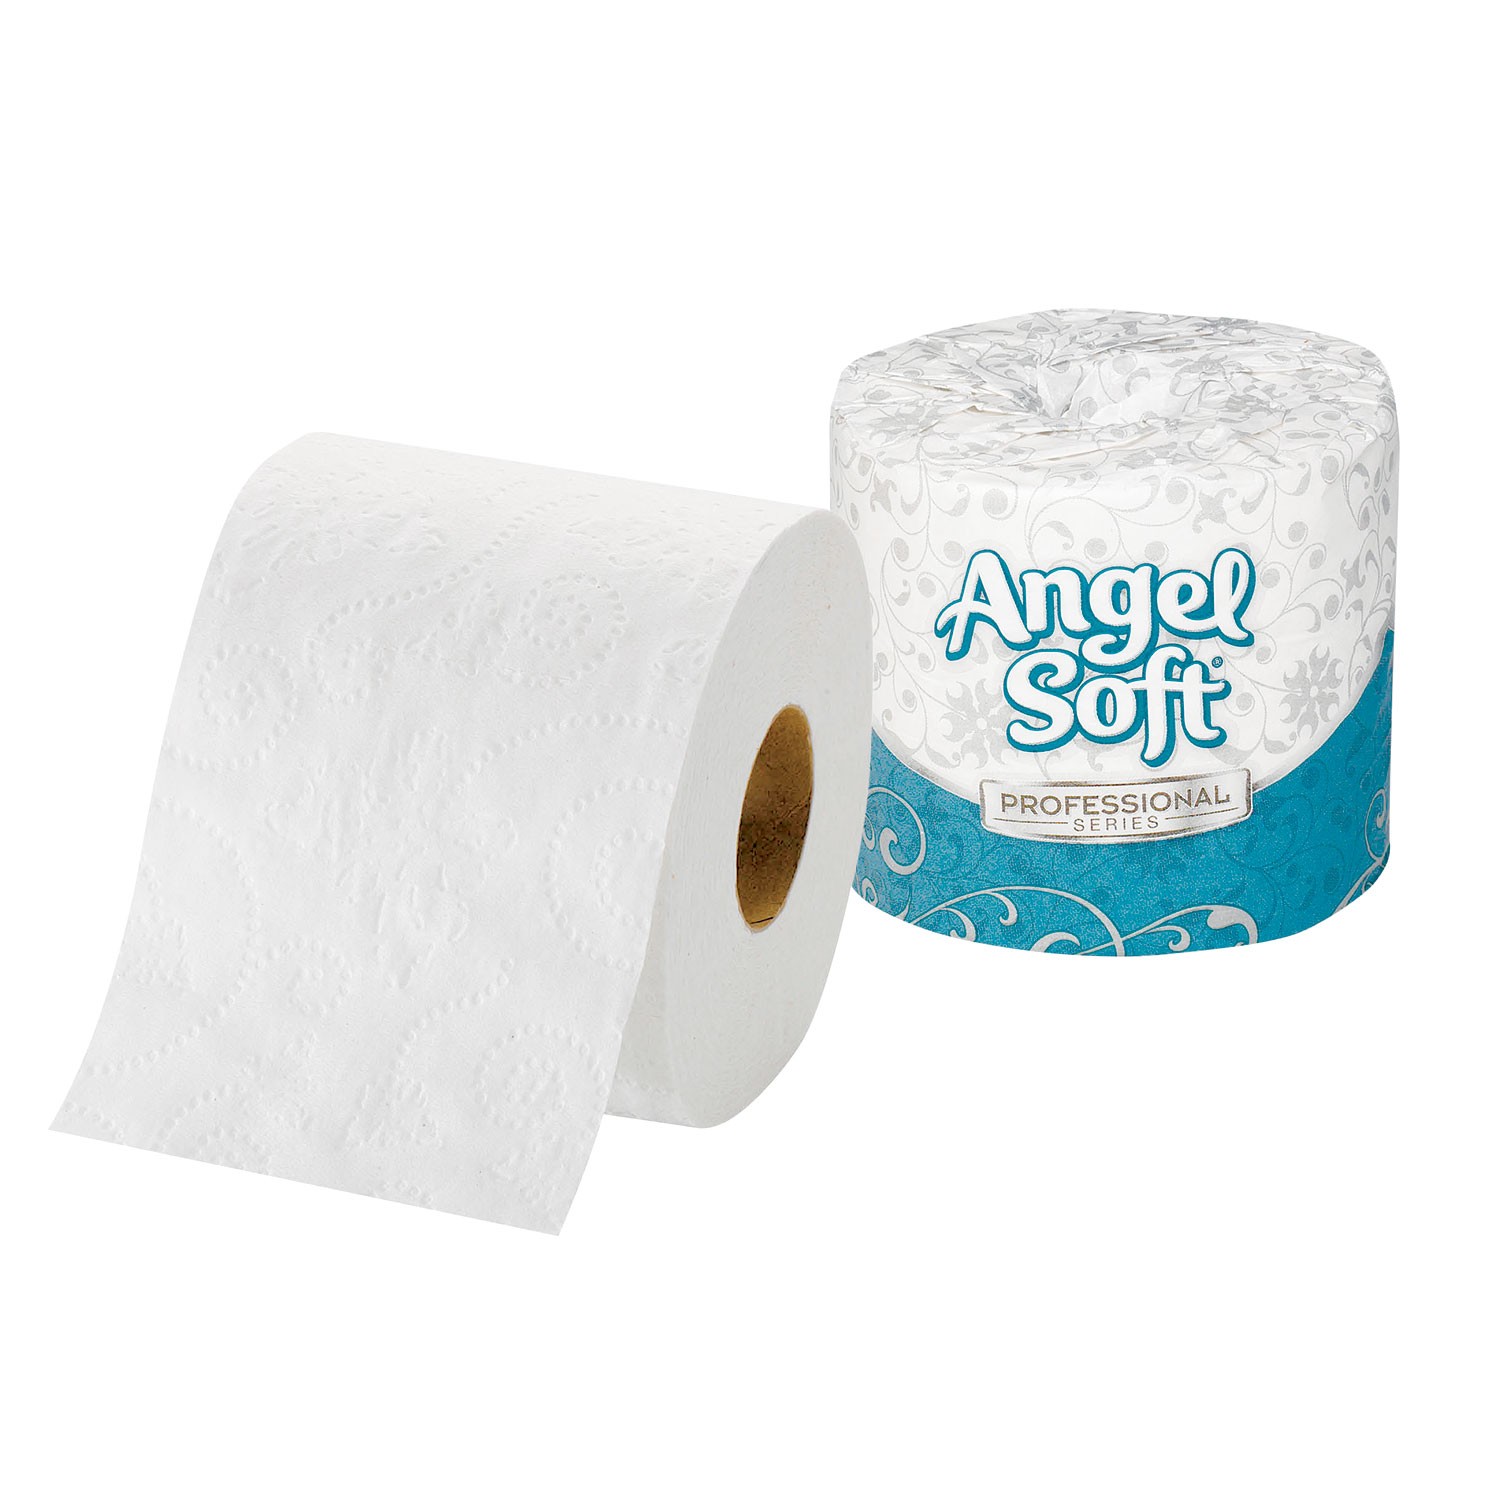  Georgia Pacific Professional 16620 Angel Soft ps Premium Bathroom Tissue, Septic Safe, 2-Ply, White, 450 Sheets/Roll, 20 Rolls/Carton (GPC16620) 